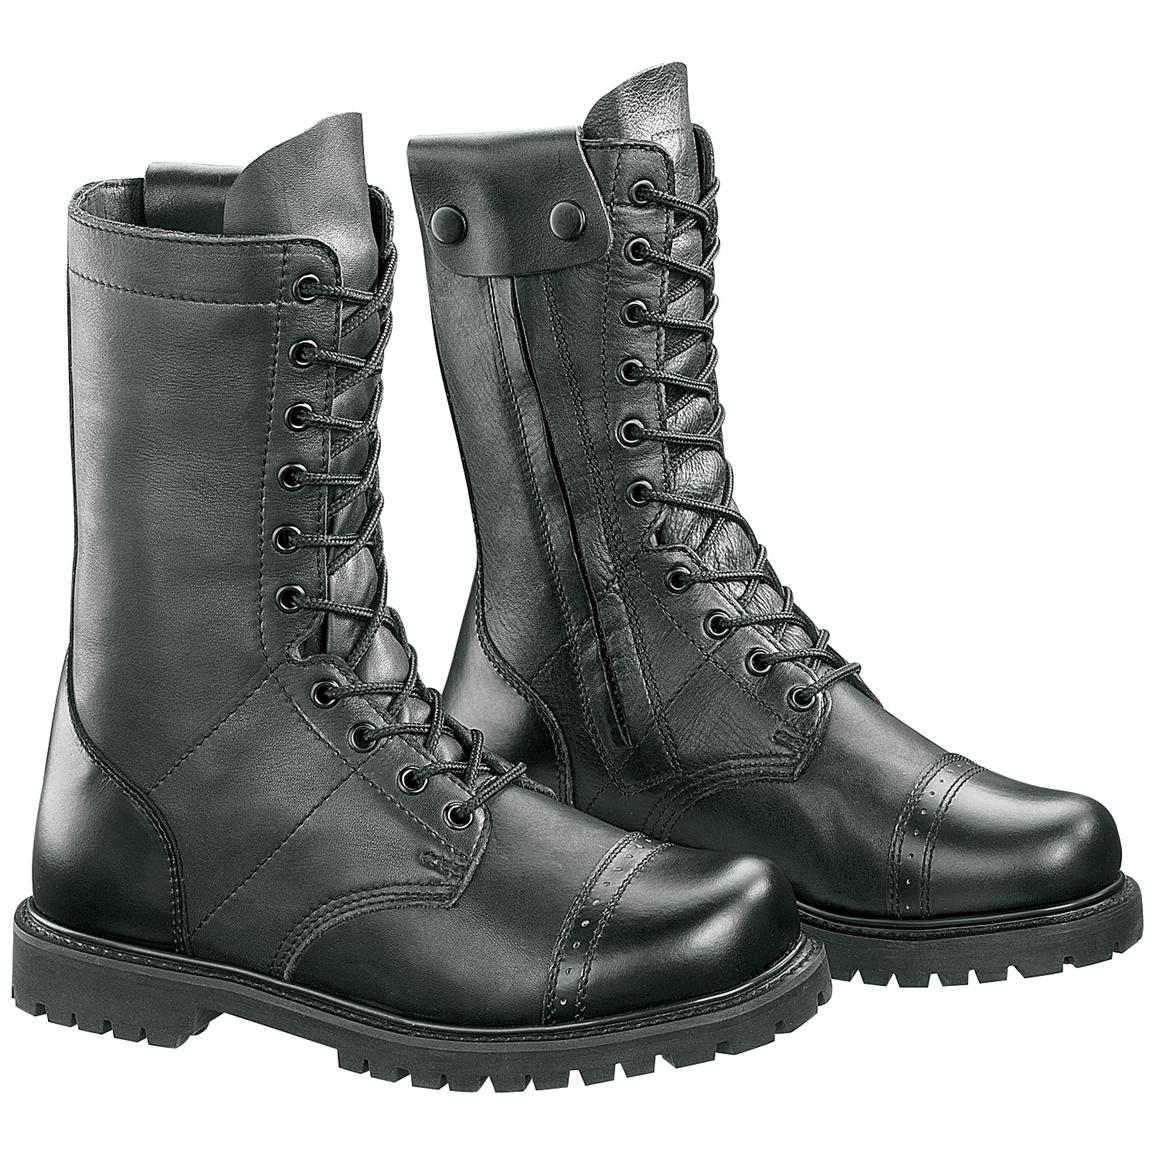 Bates Men's 11" Paratrooper Side-Zip Boots, Black